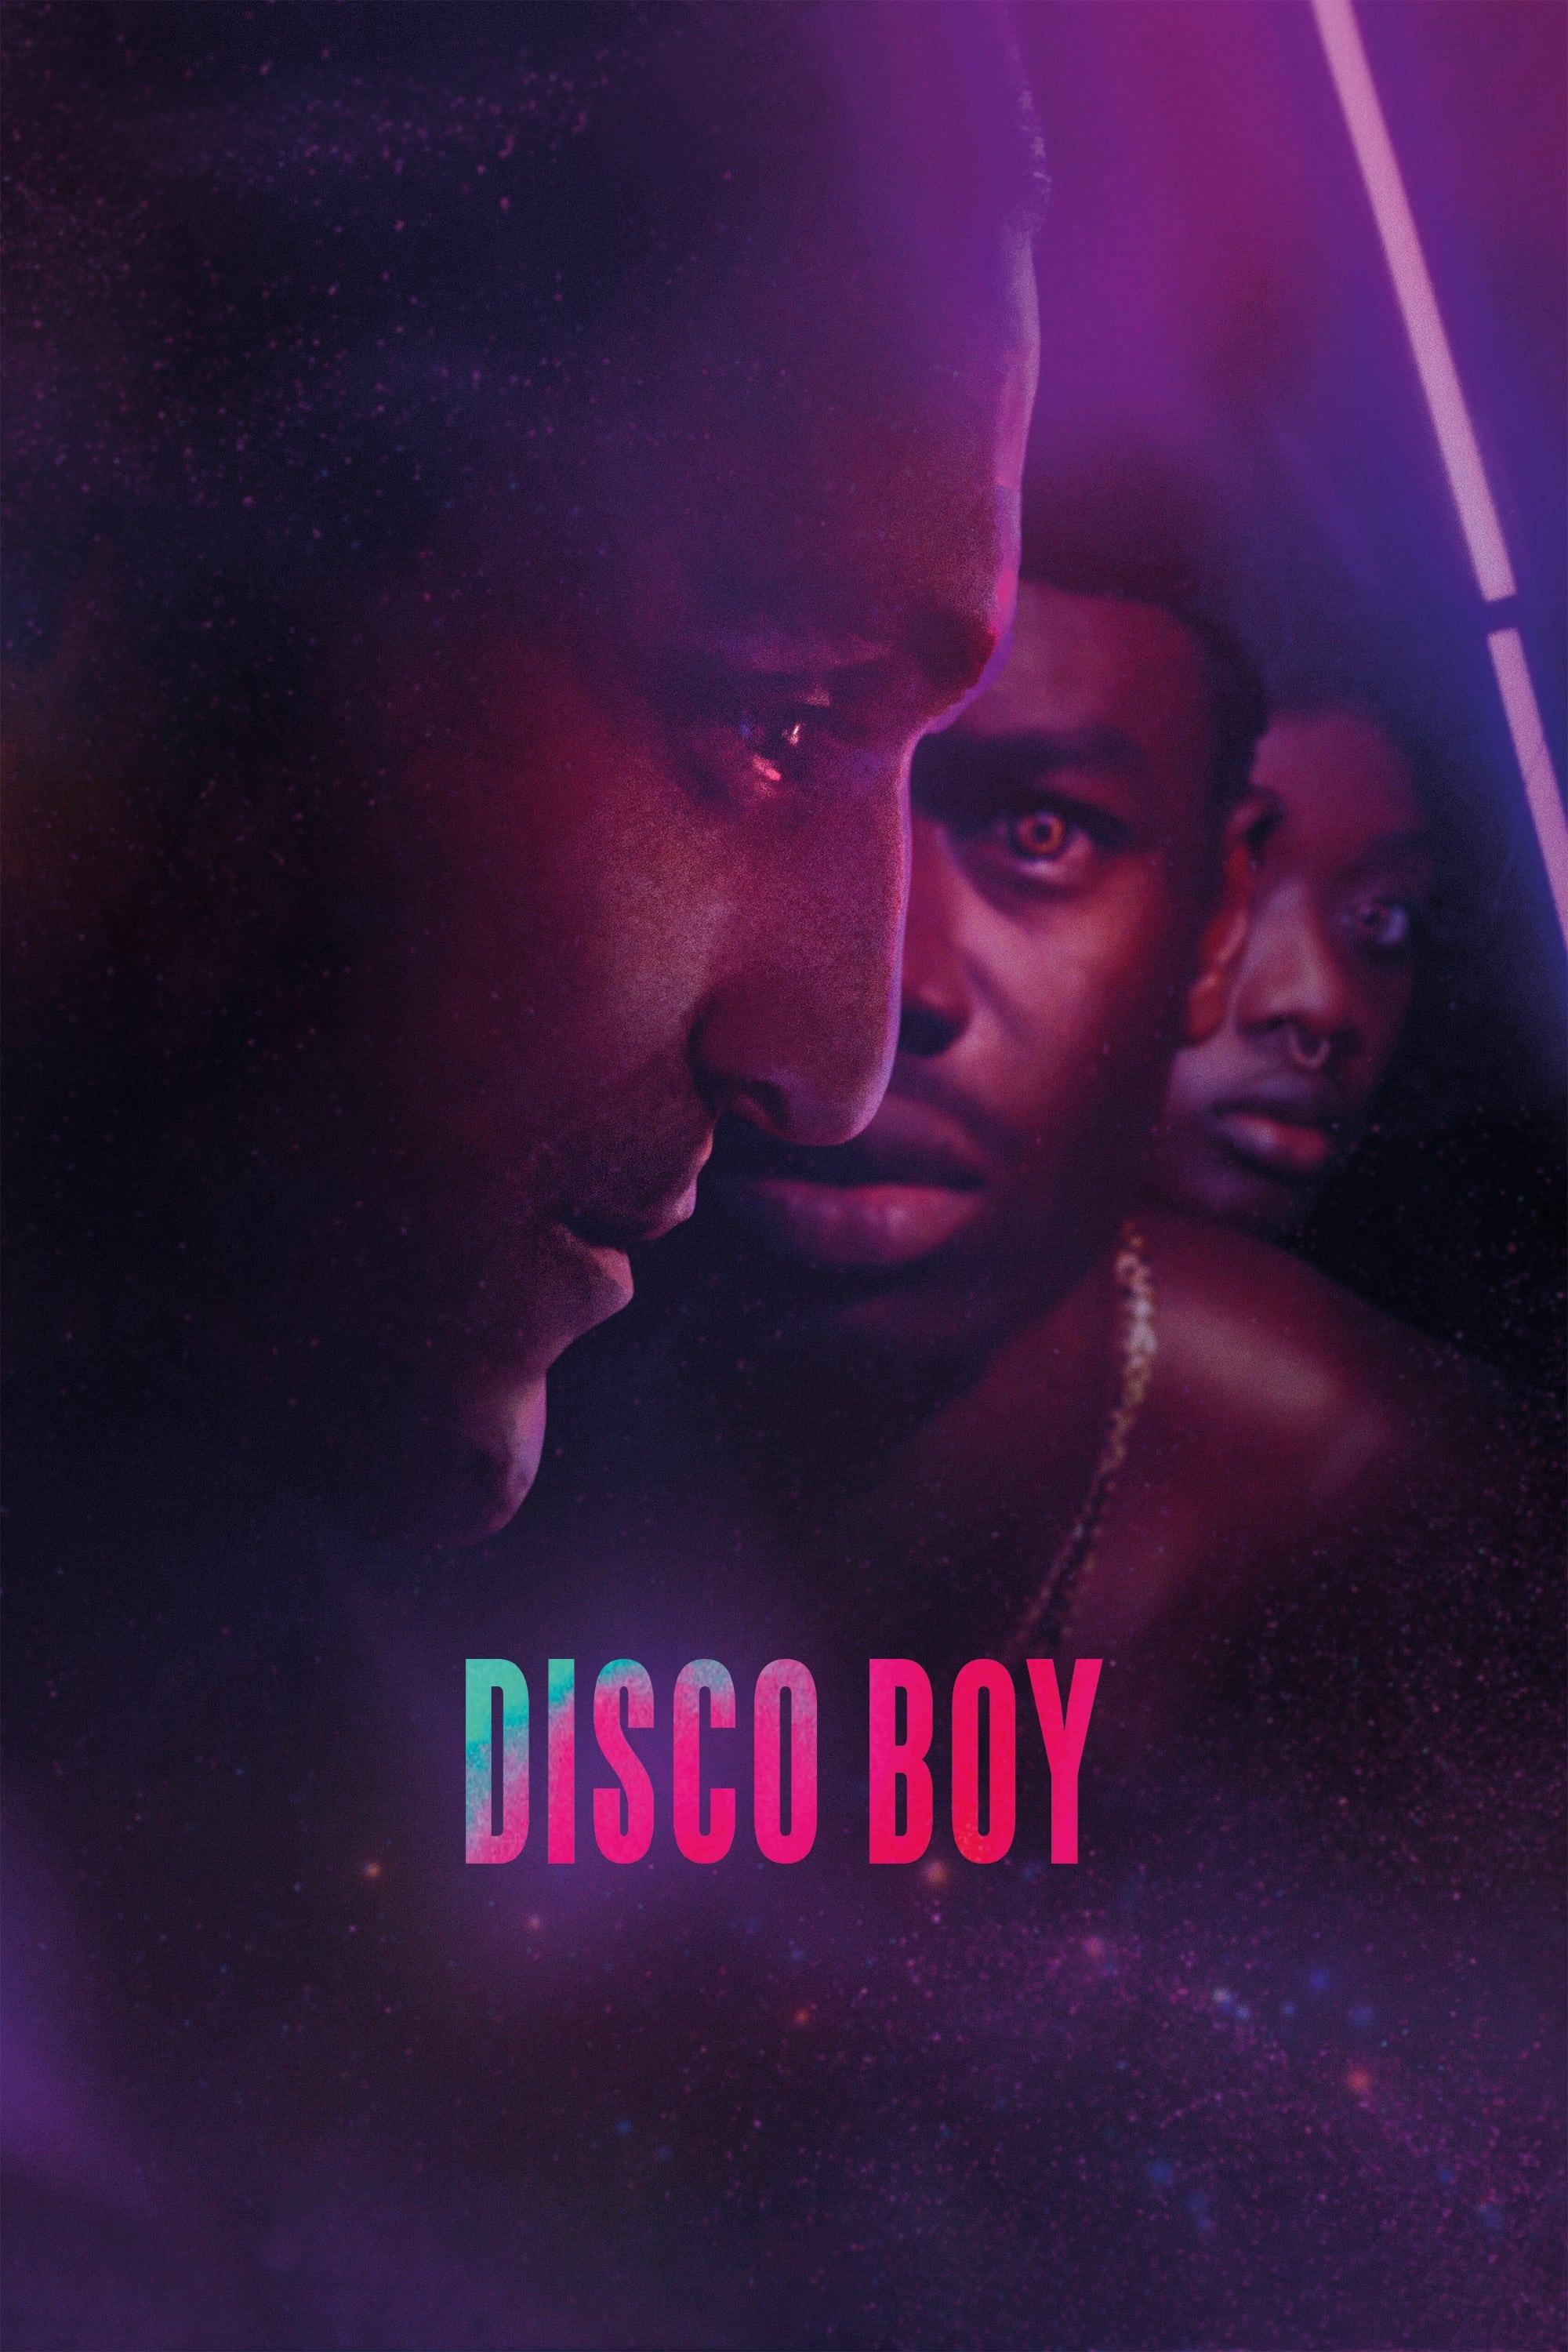 Disco Boy poster